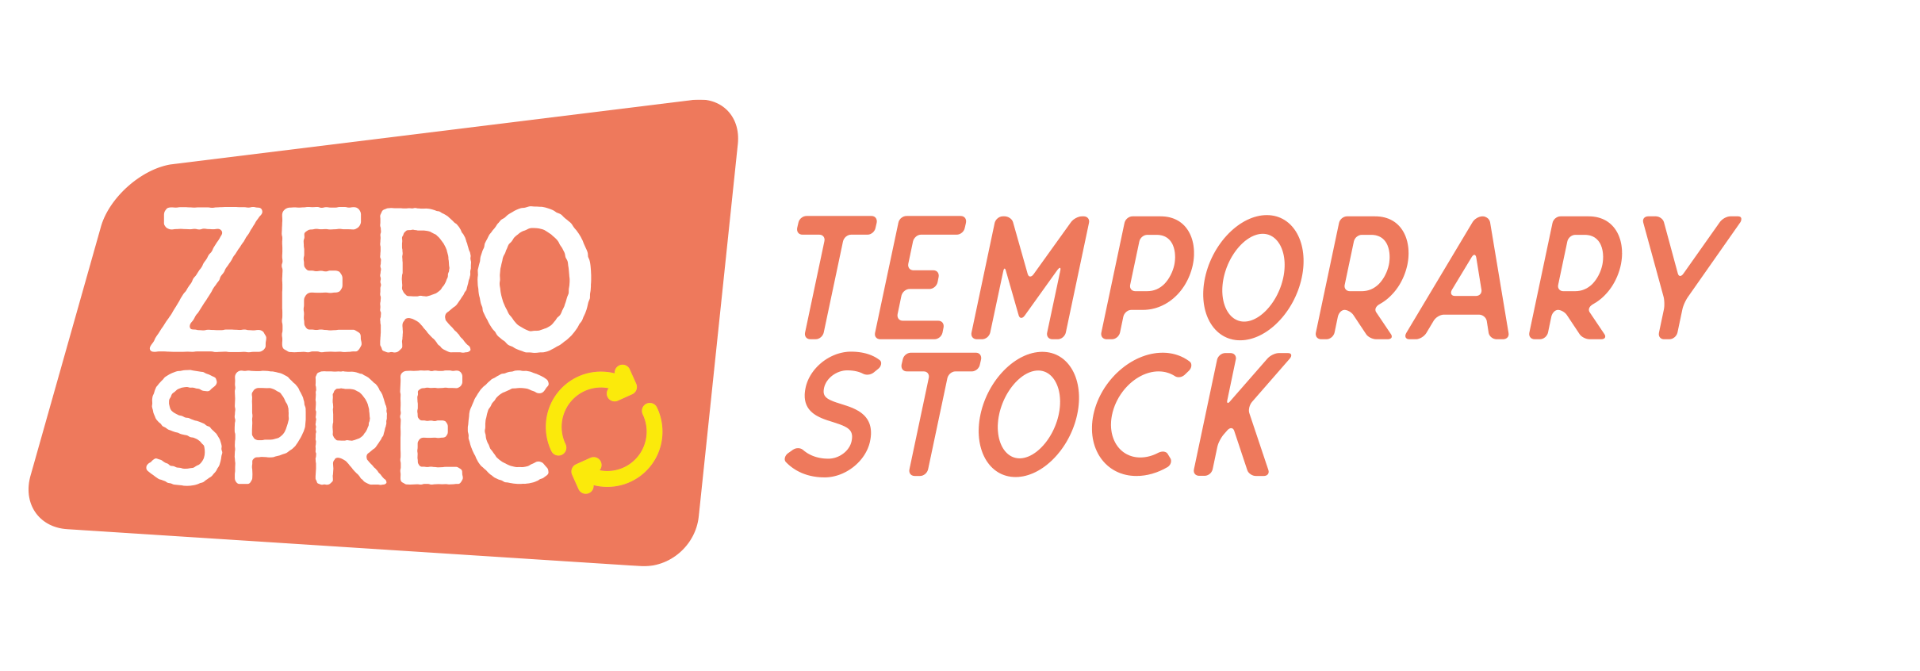 zero spreco temporary stock